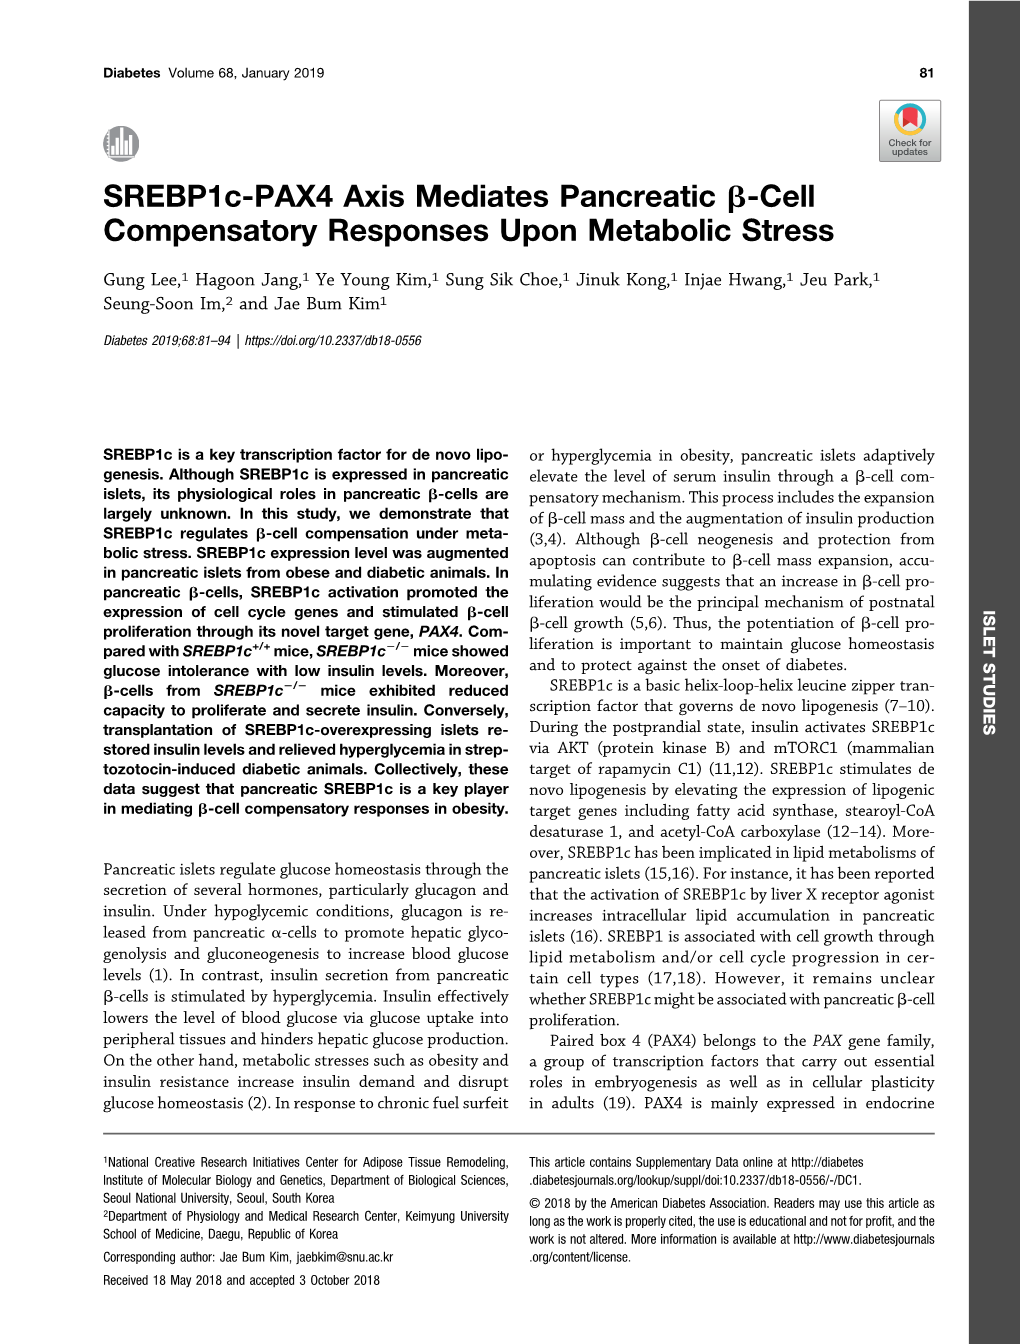 Srebp1c-PAX4 Axis Mediates Pancreatic Β-Cell Compensatory